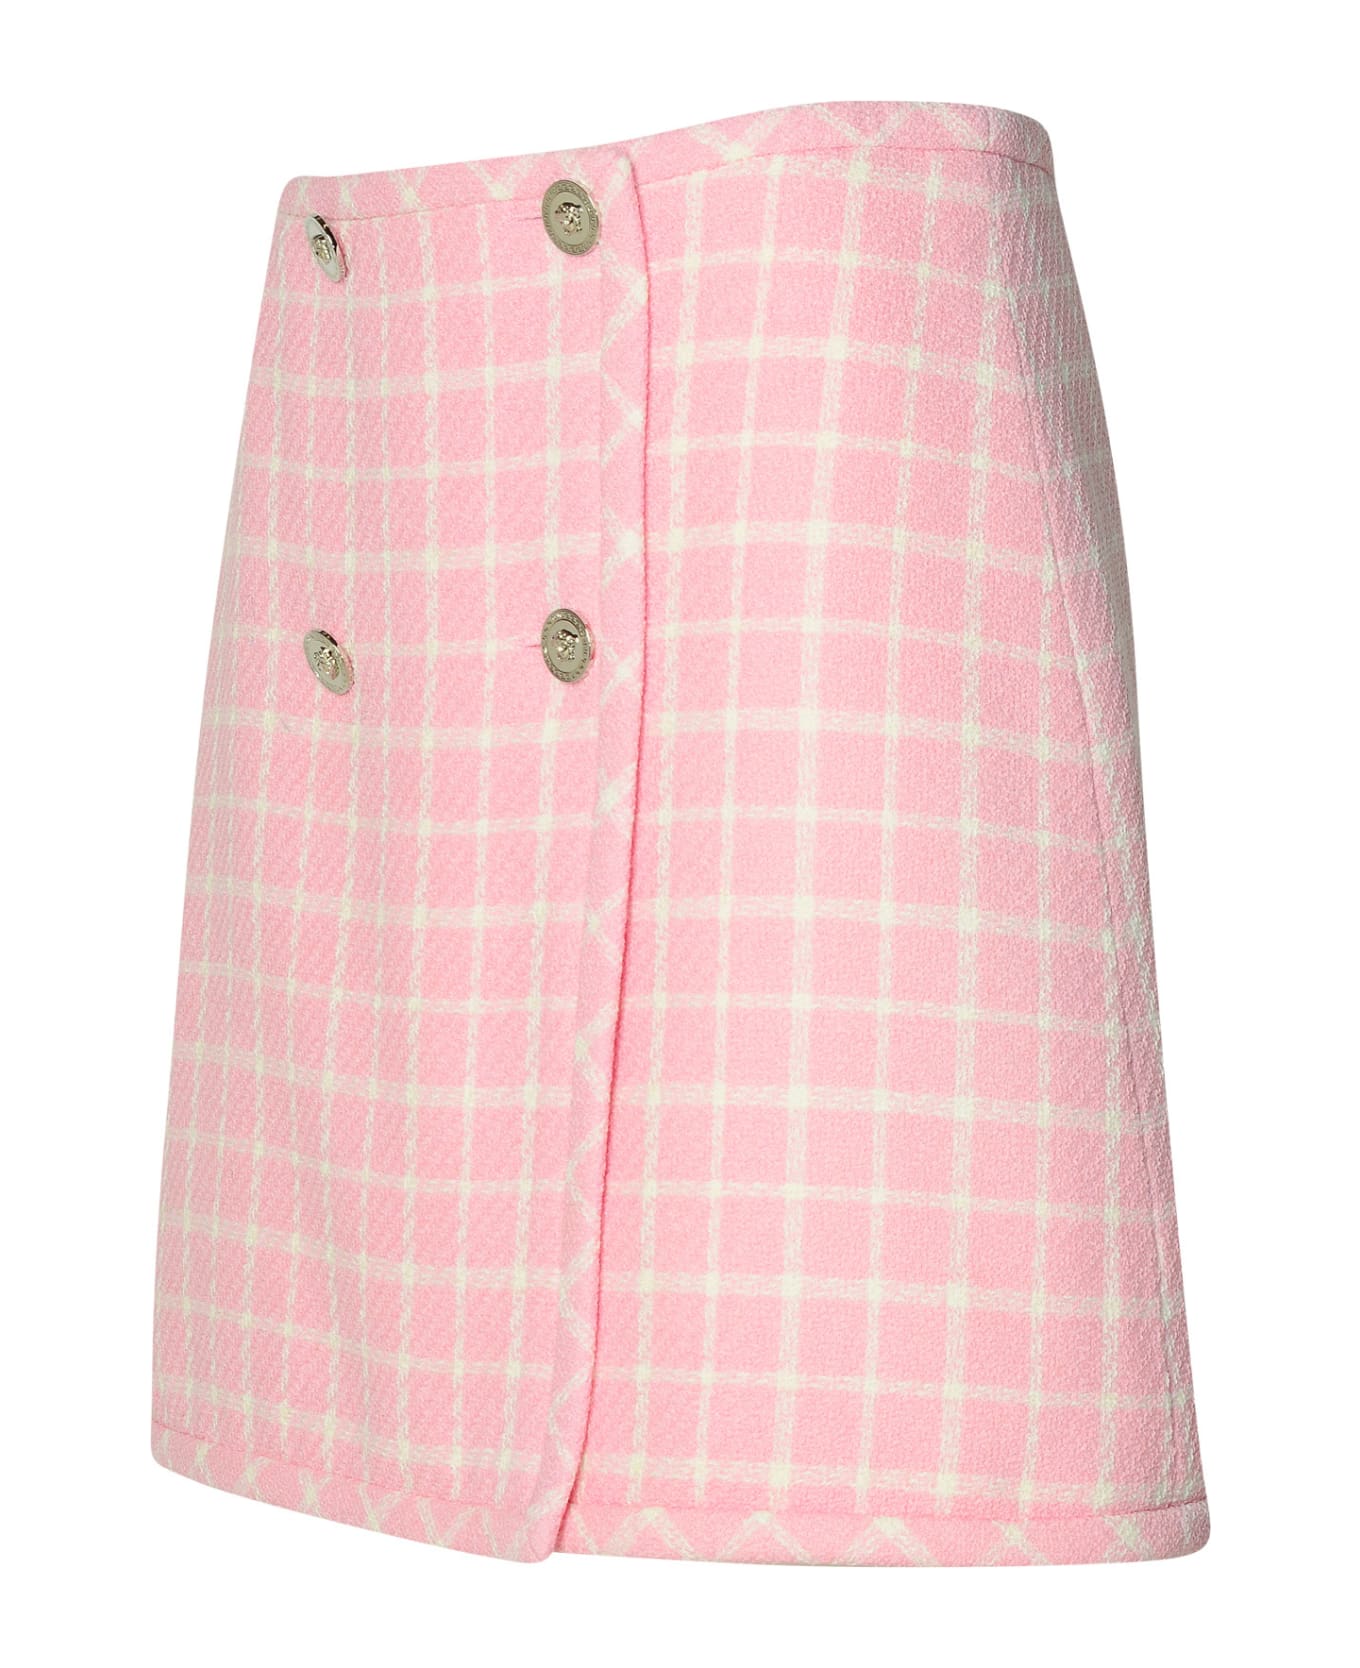 Versace Pink Virgin Wool Blend Miniskirt - Pastel pink + white